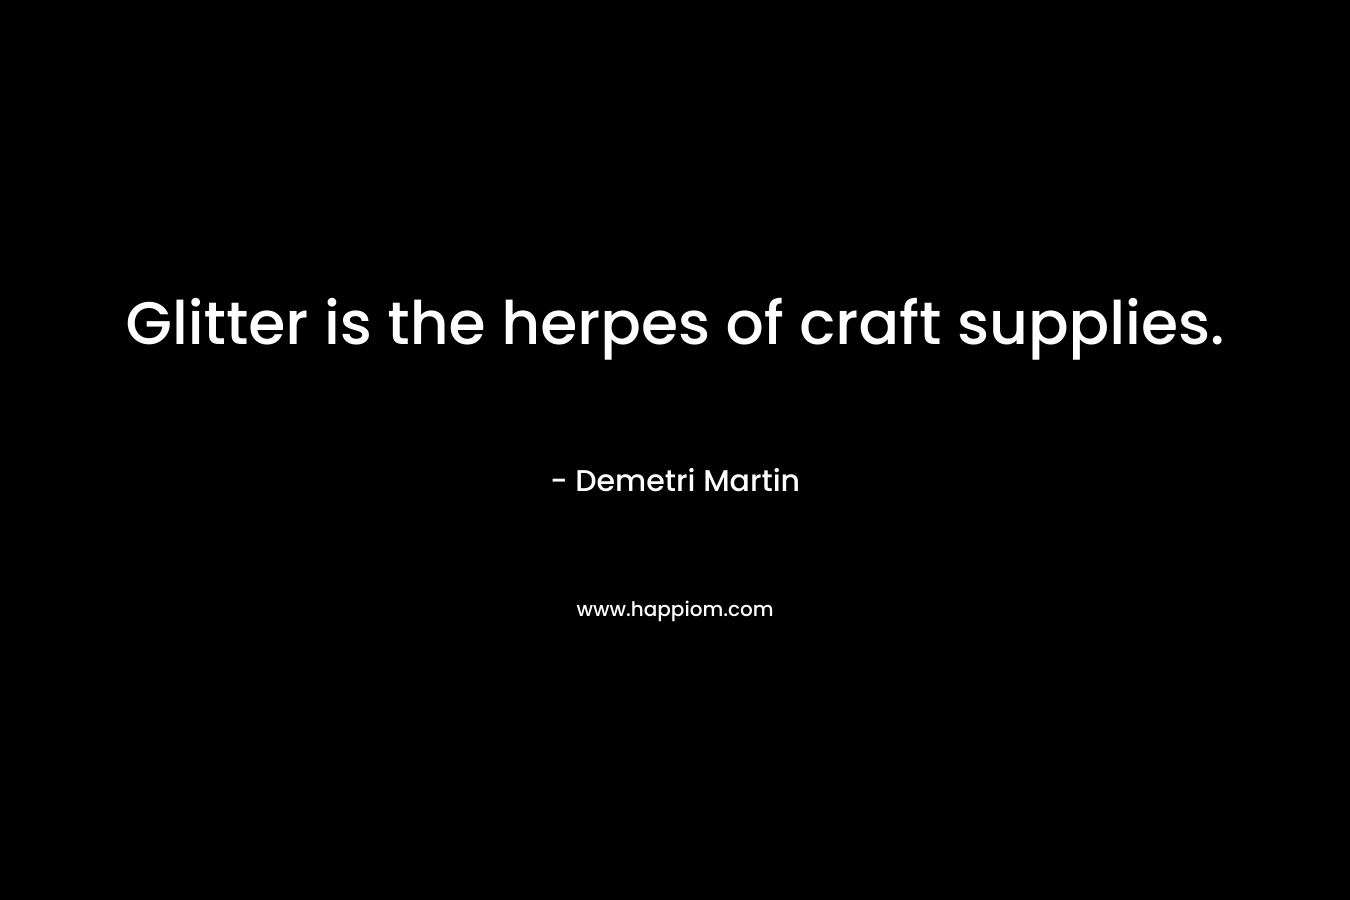 Glitter is the herpes of craft supplies. – Demetri Martin